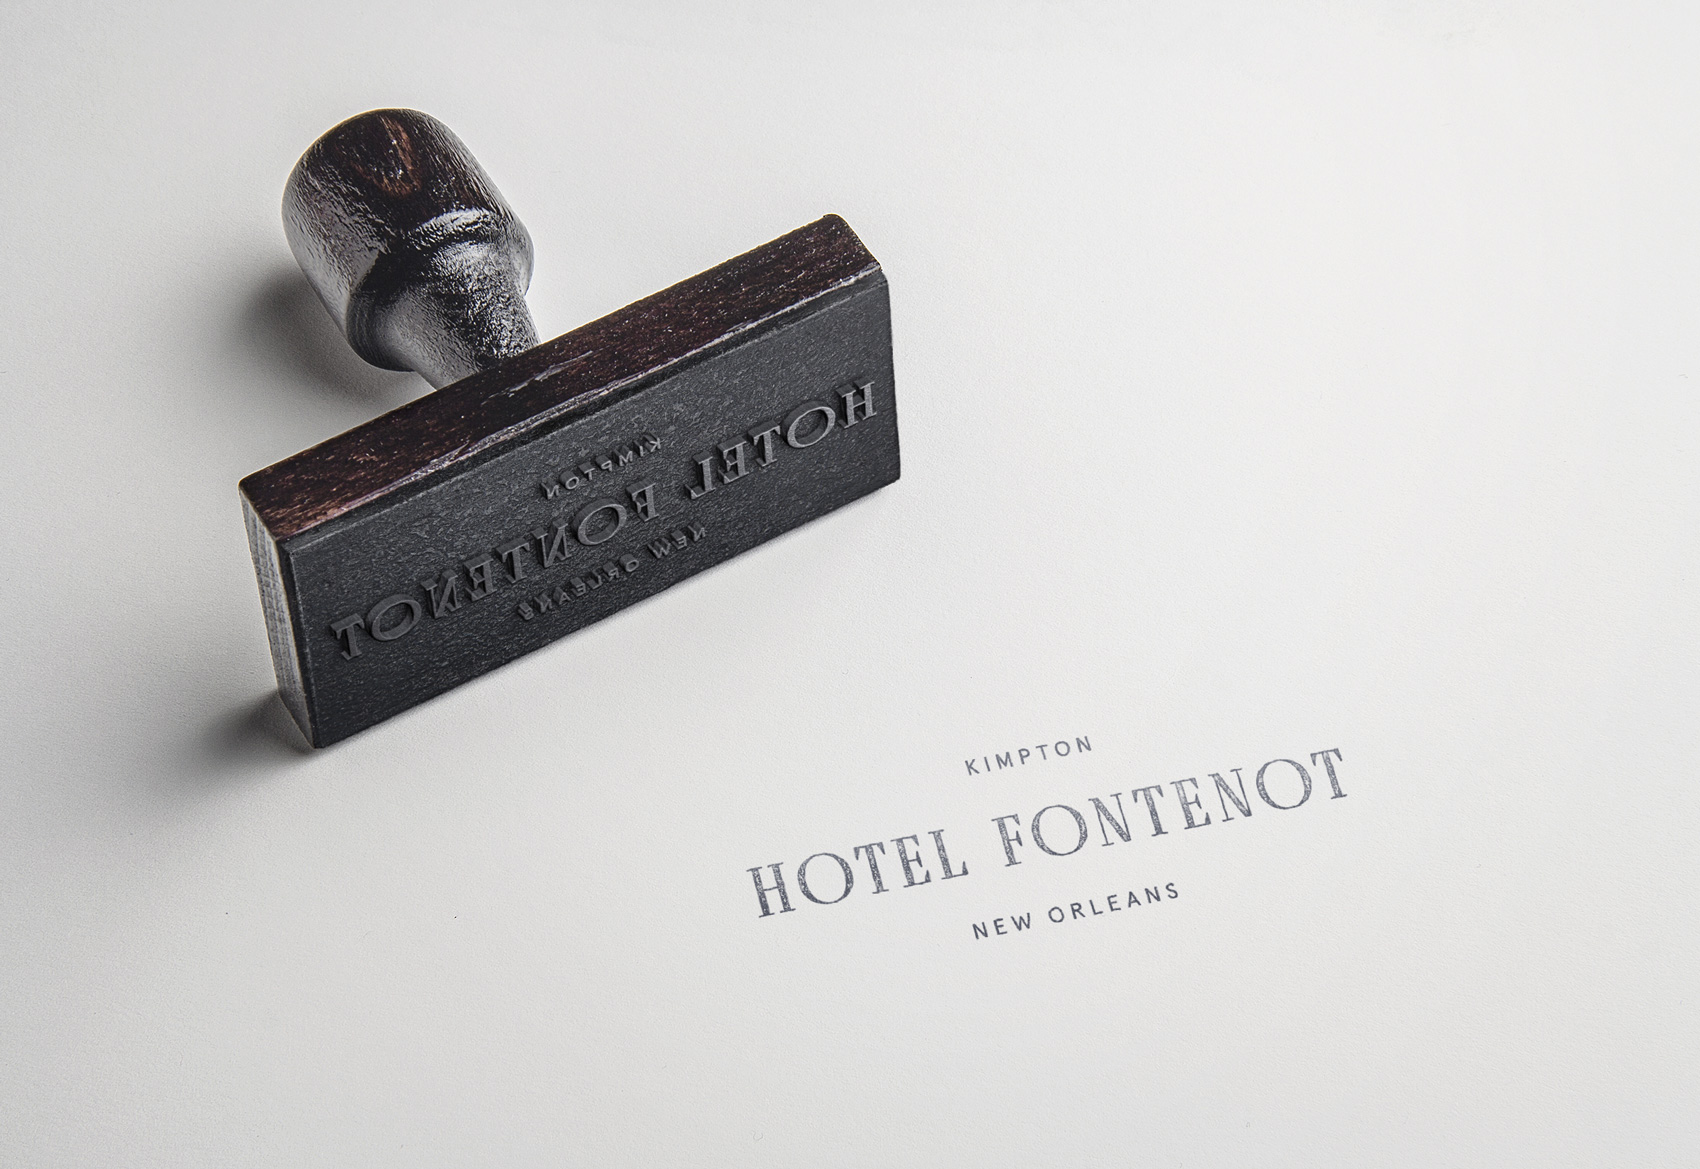 Hotel Fontenot by Mark Zeff